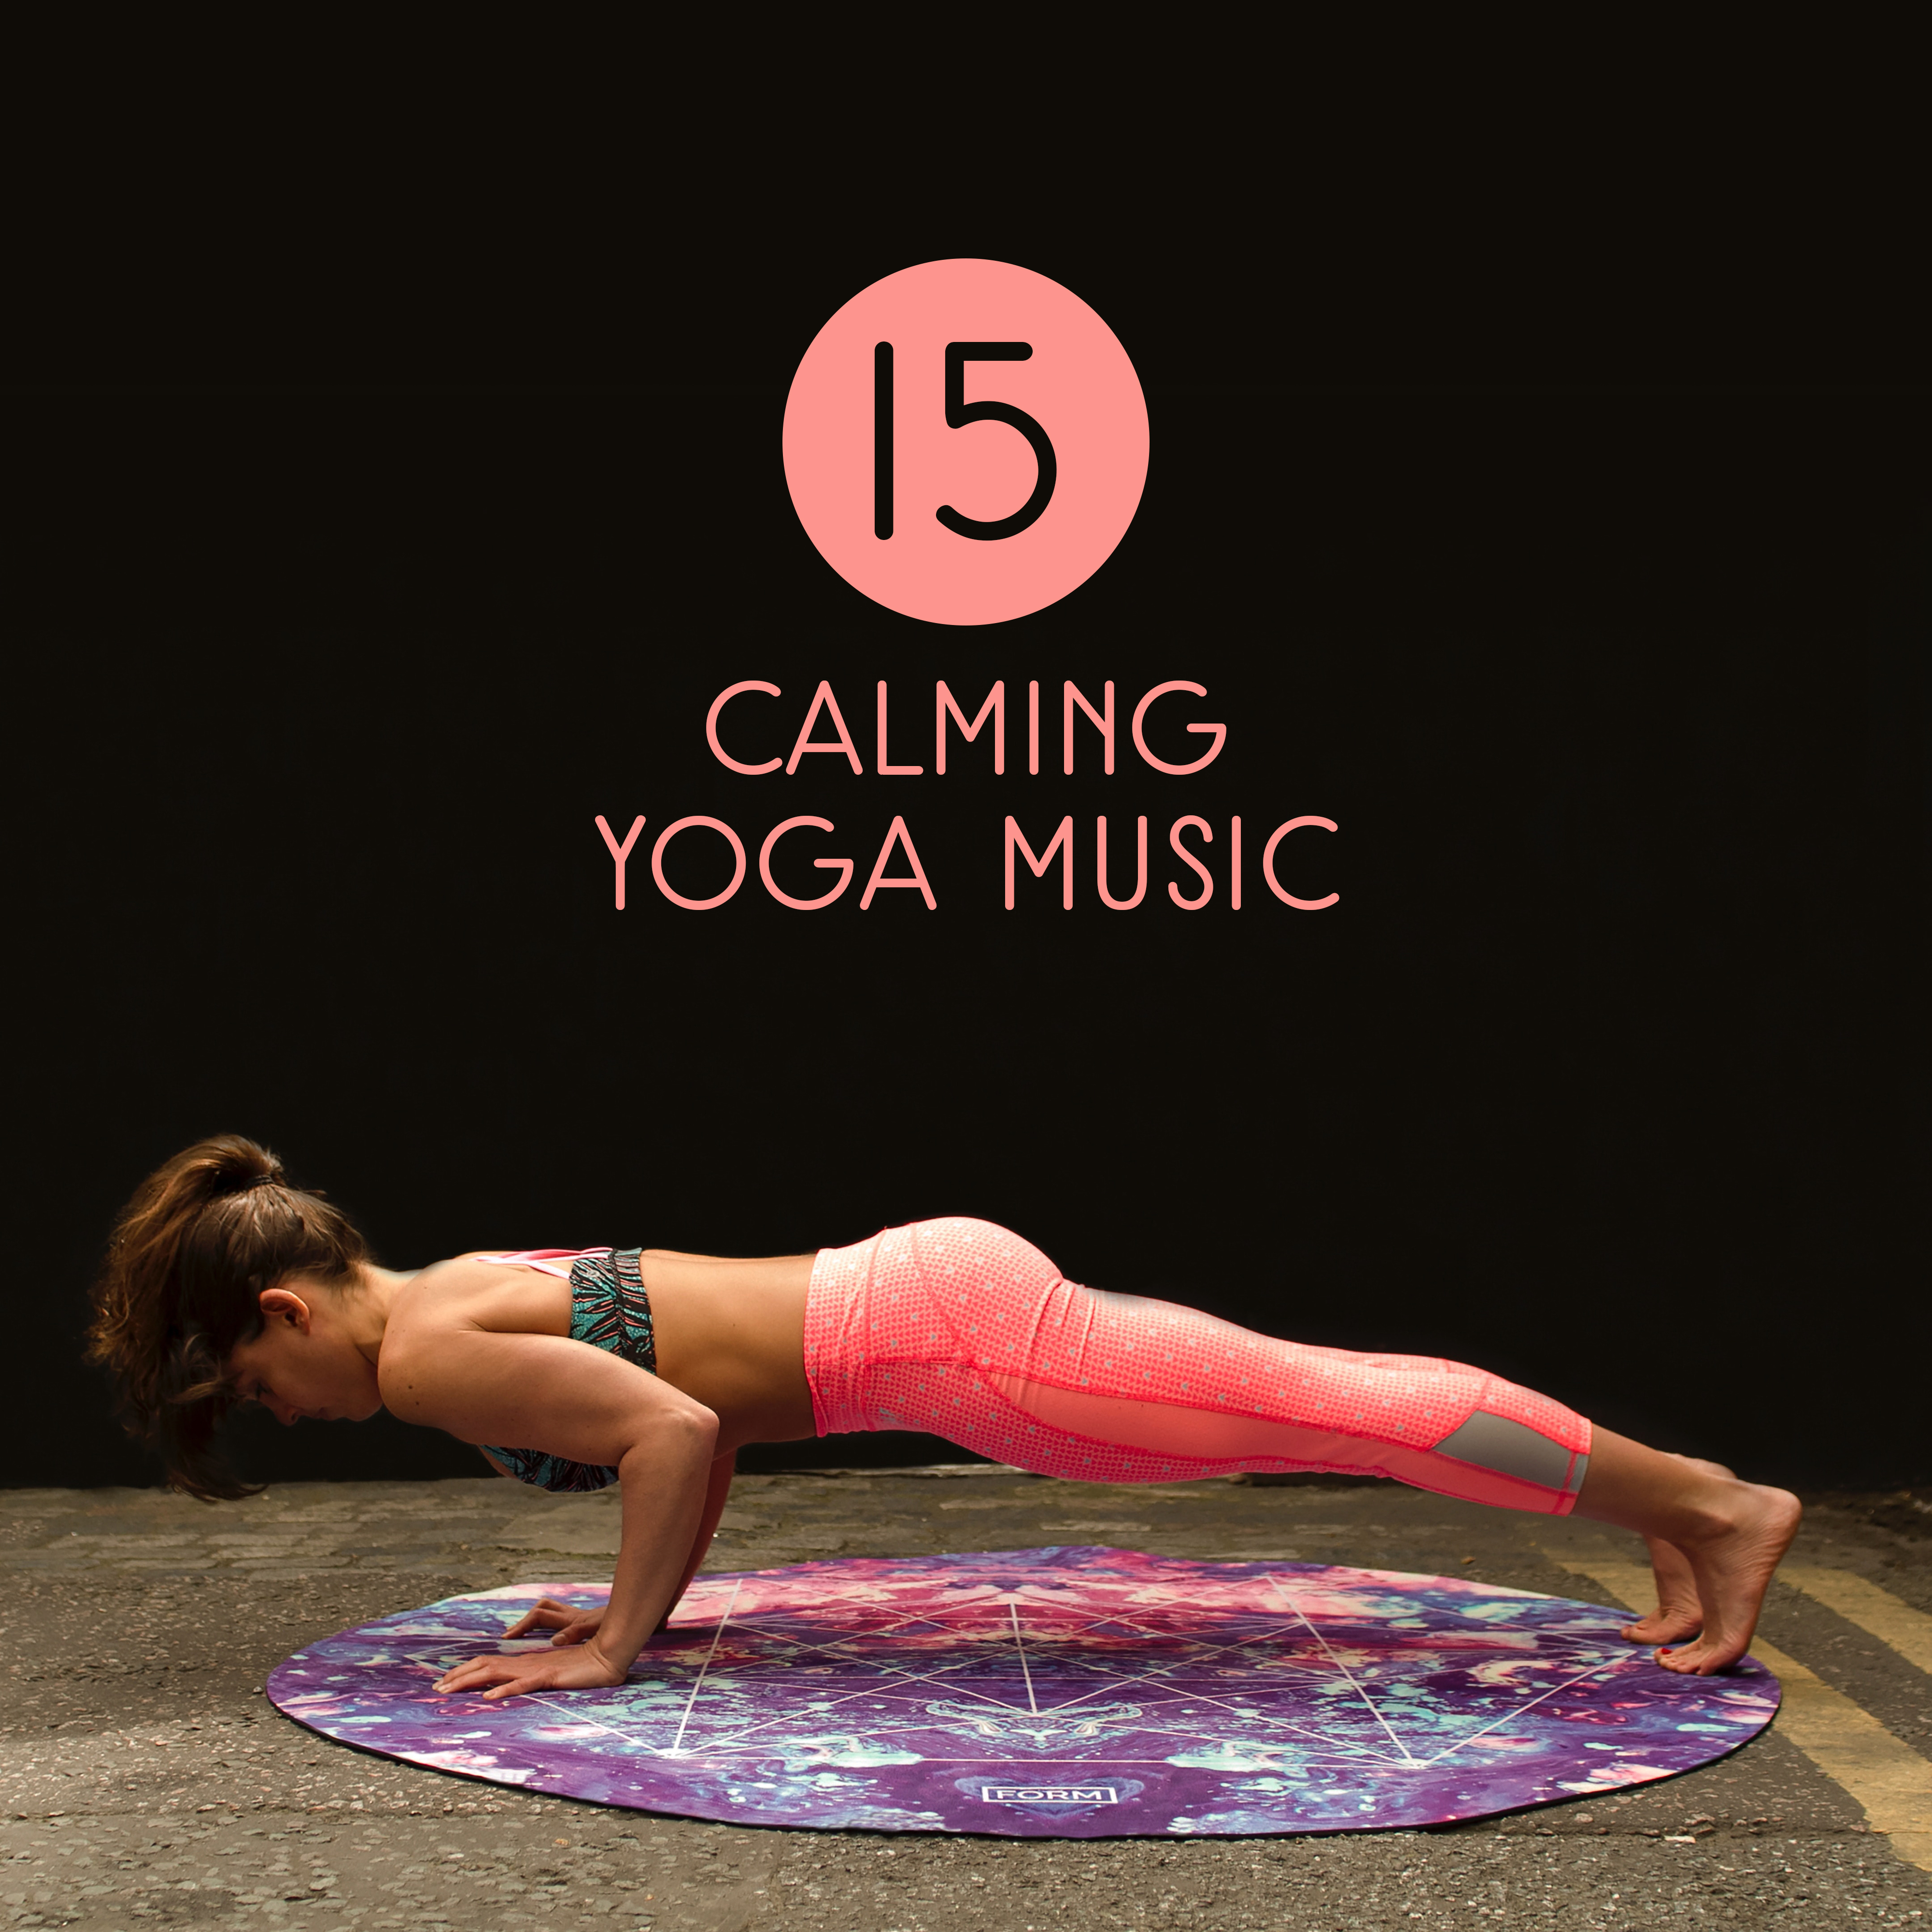 15 Calming Yoga Music